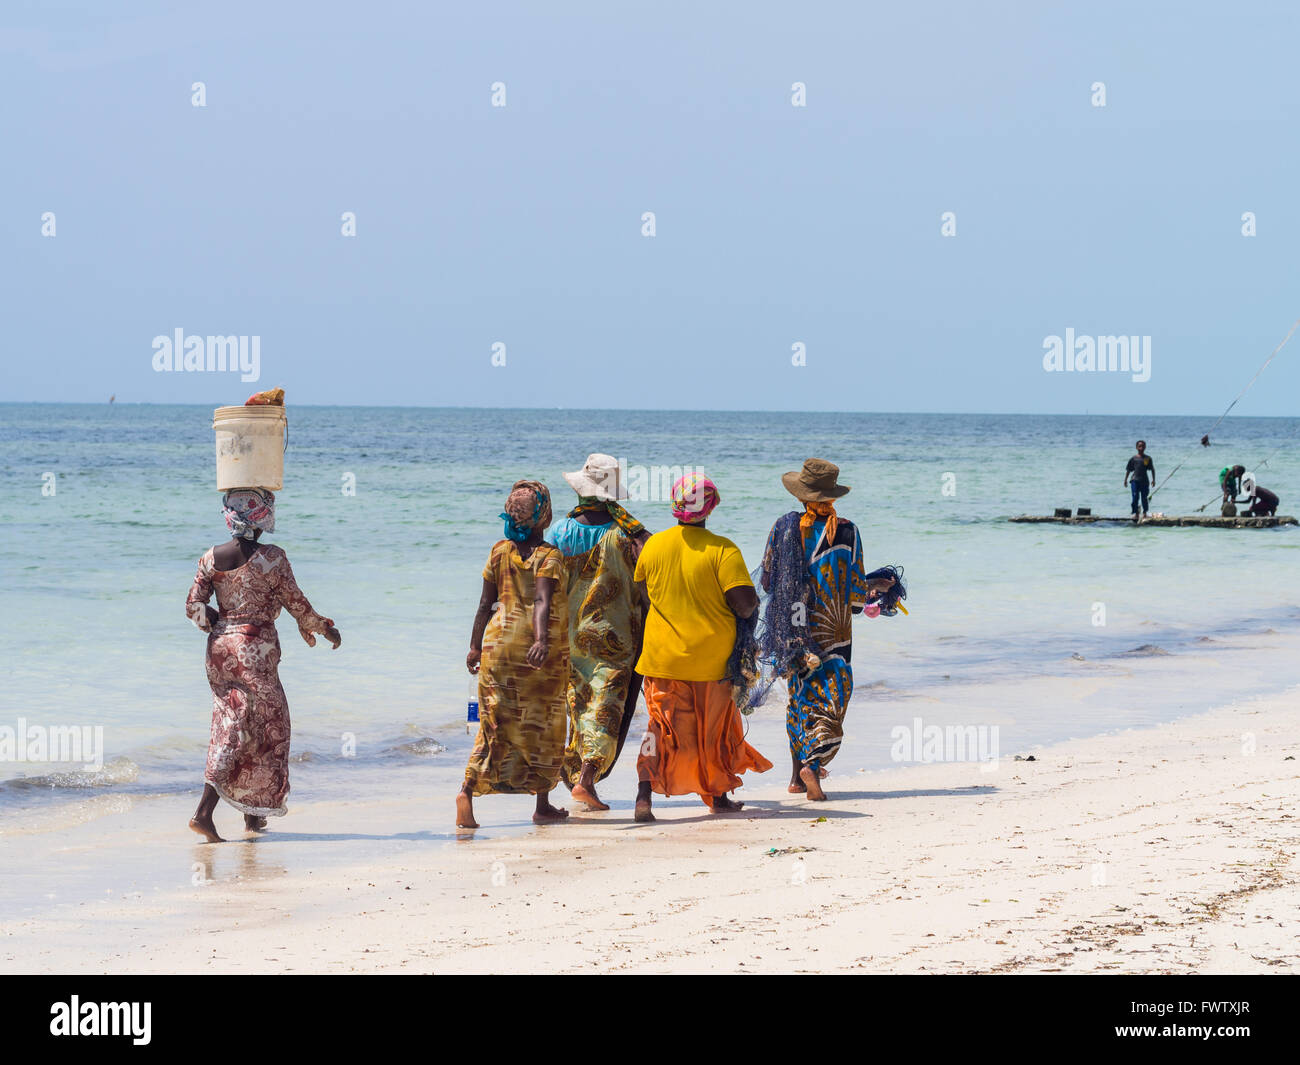 Local women going fishing on a beach in Zanzibar, Tanzania. Stock Photo